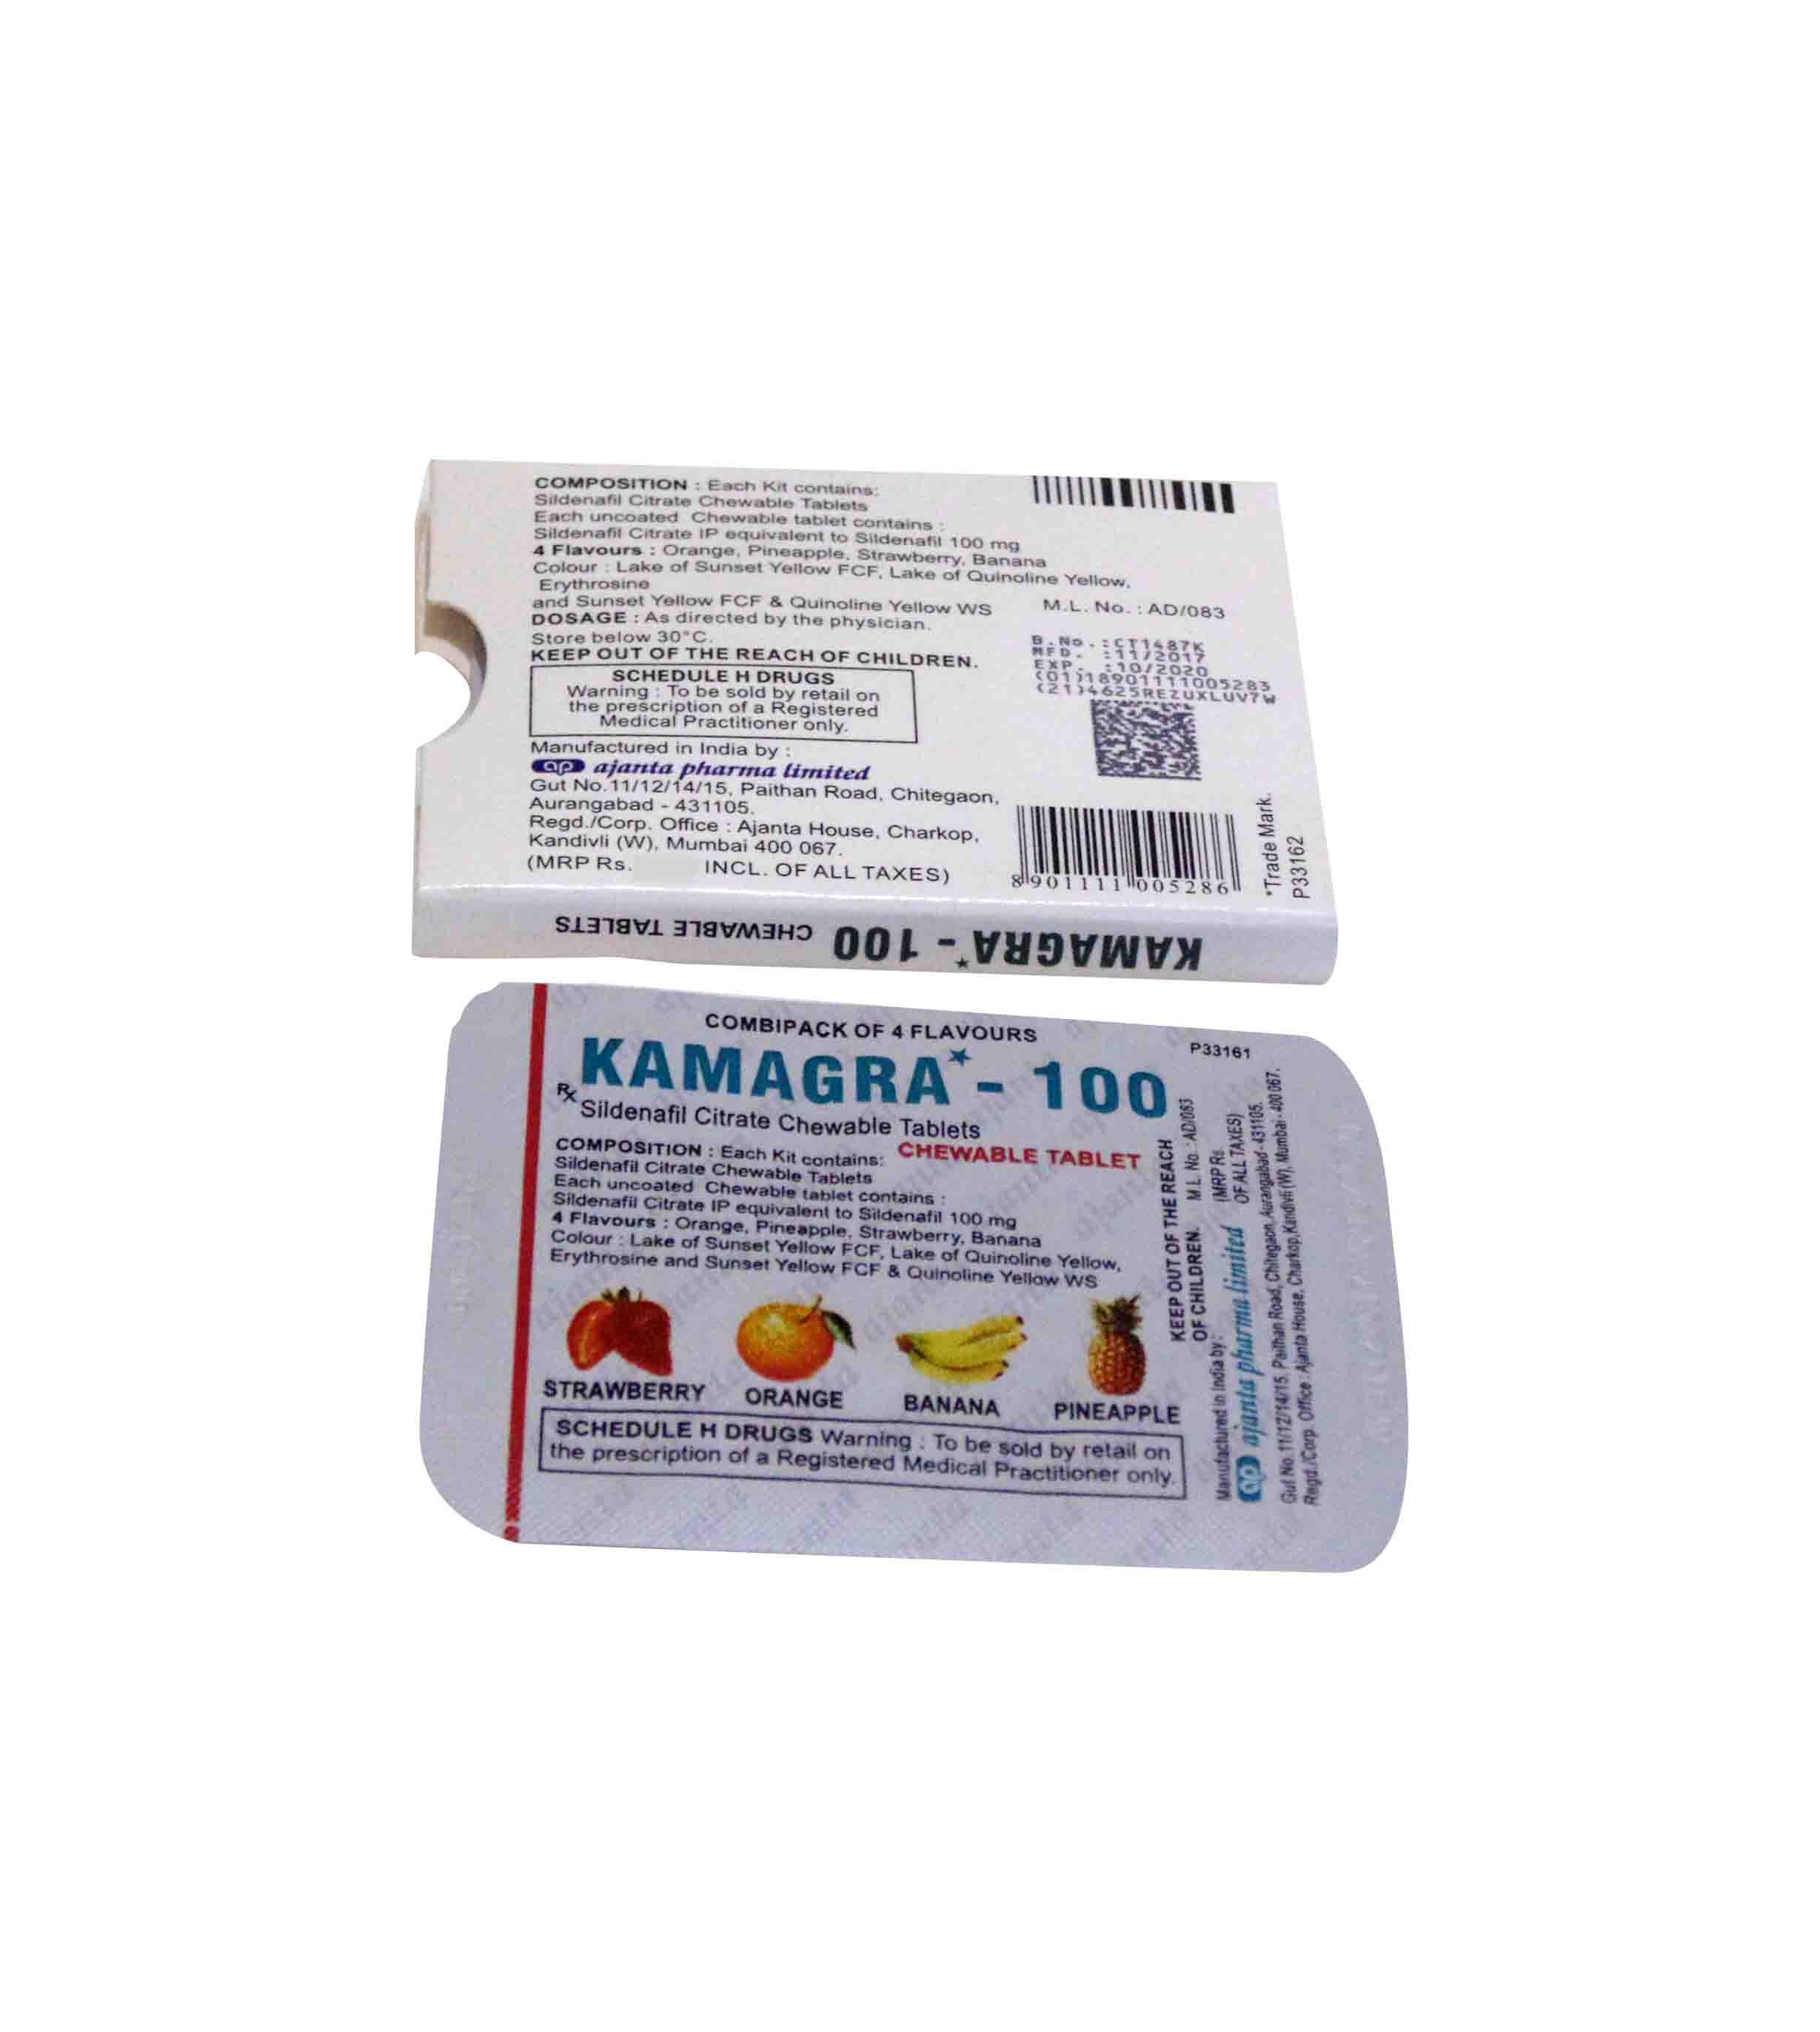 Kamagra Oral Jelly 100 Mg at Rs 50/packet